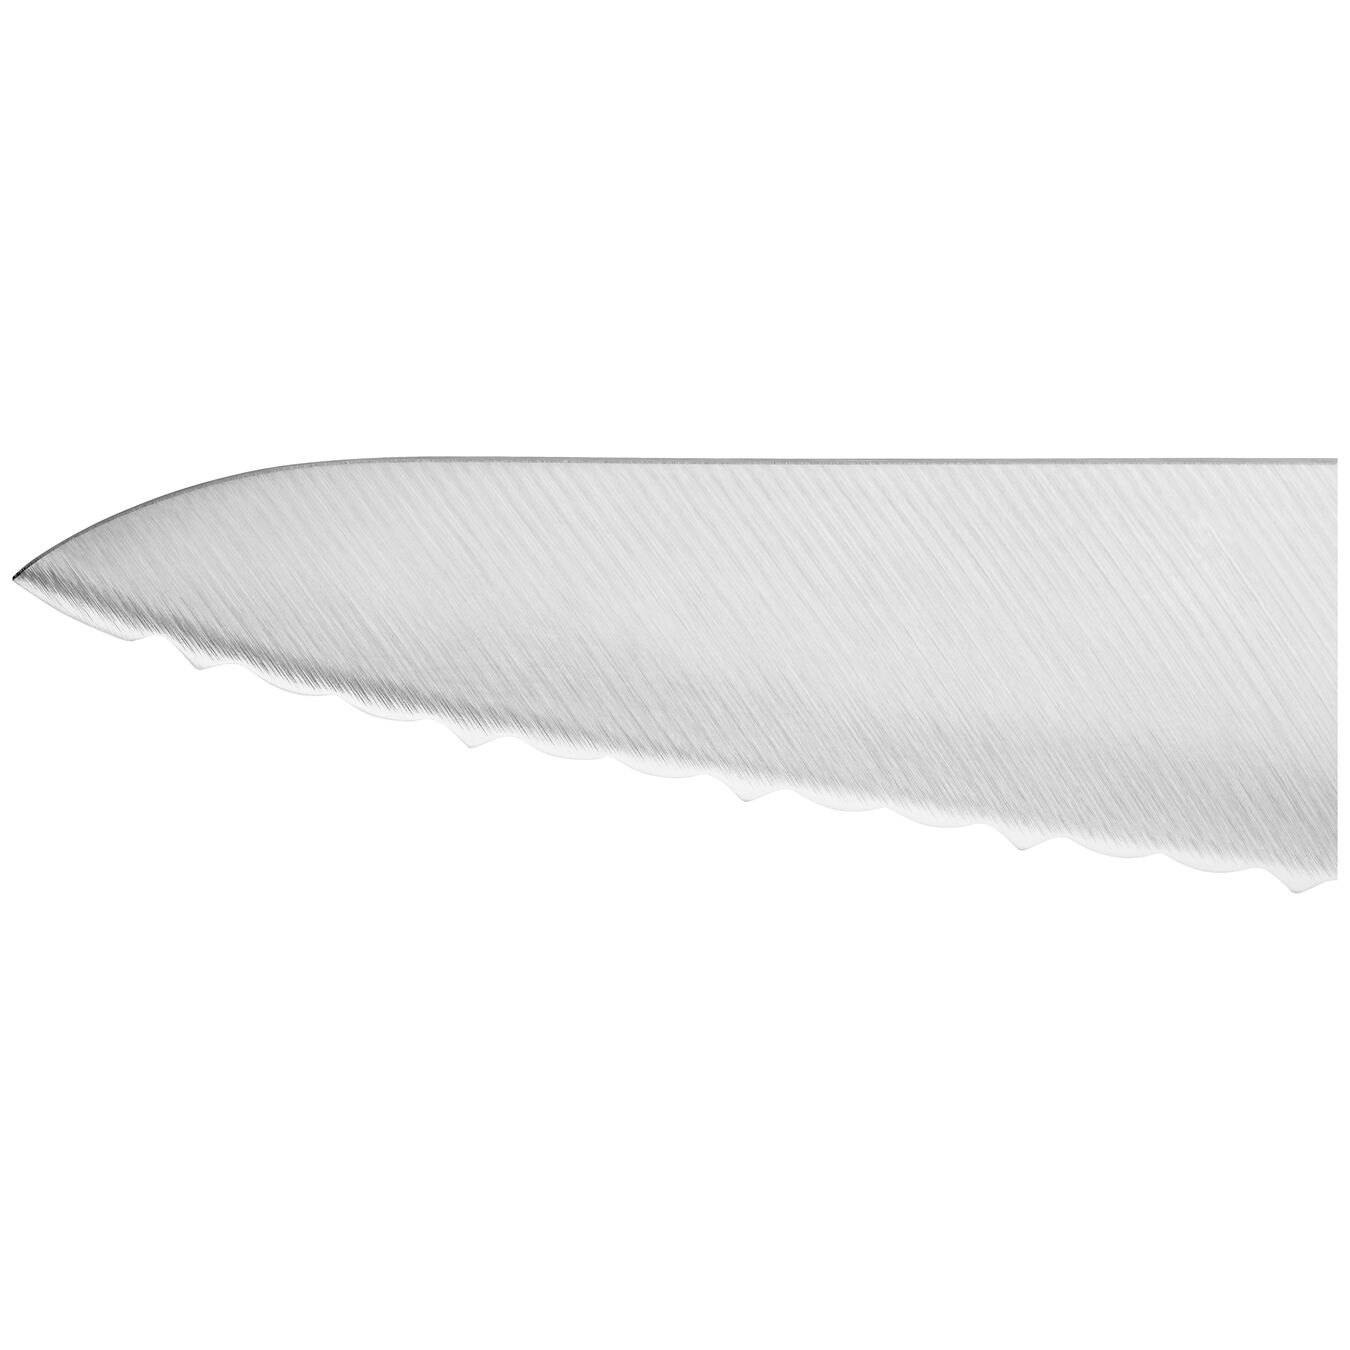 Kompakt kokkekniv 14 cm,,large 2